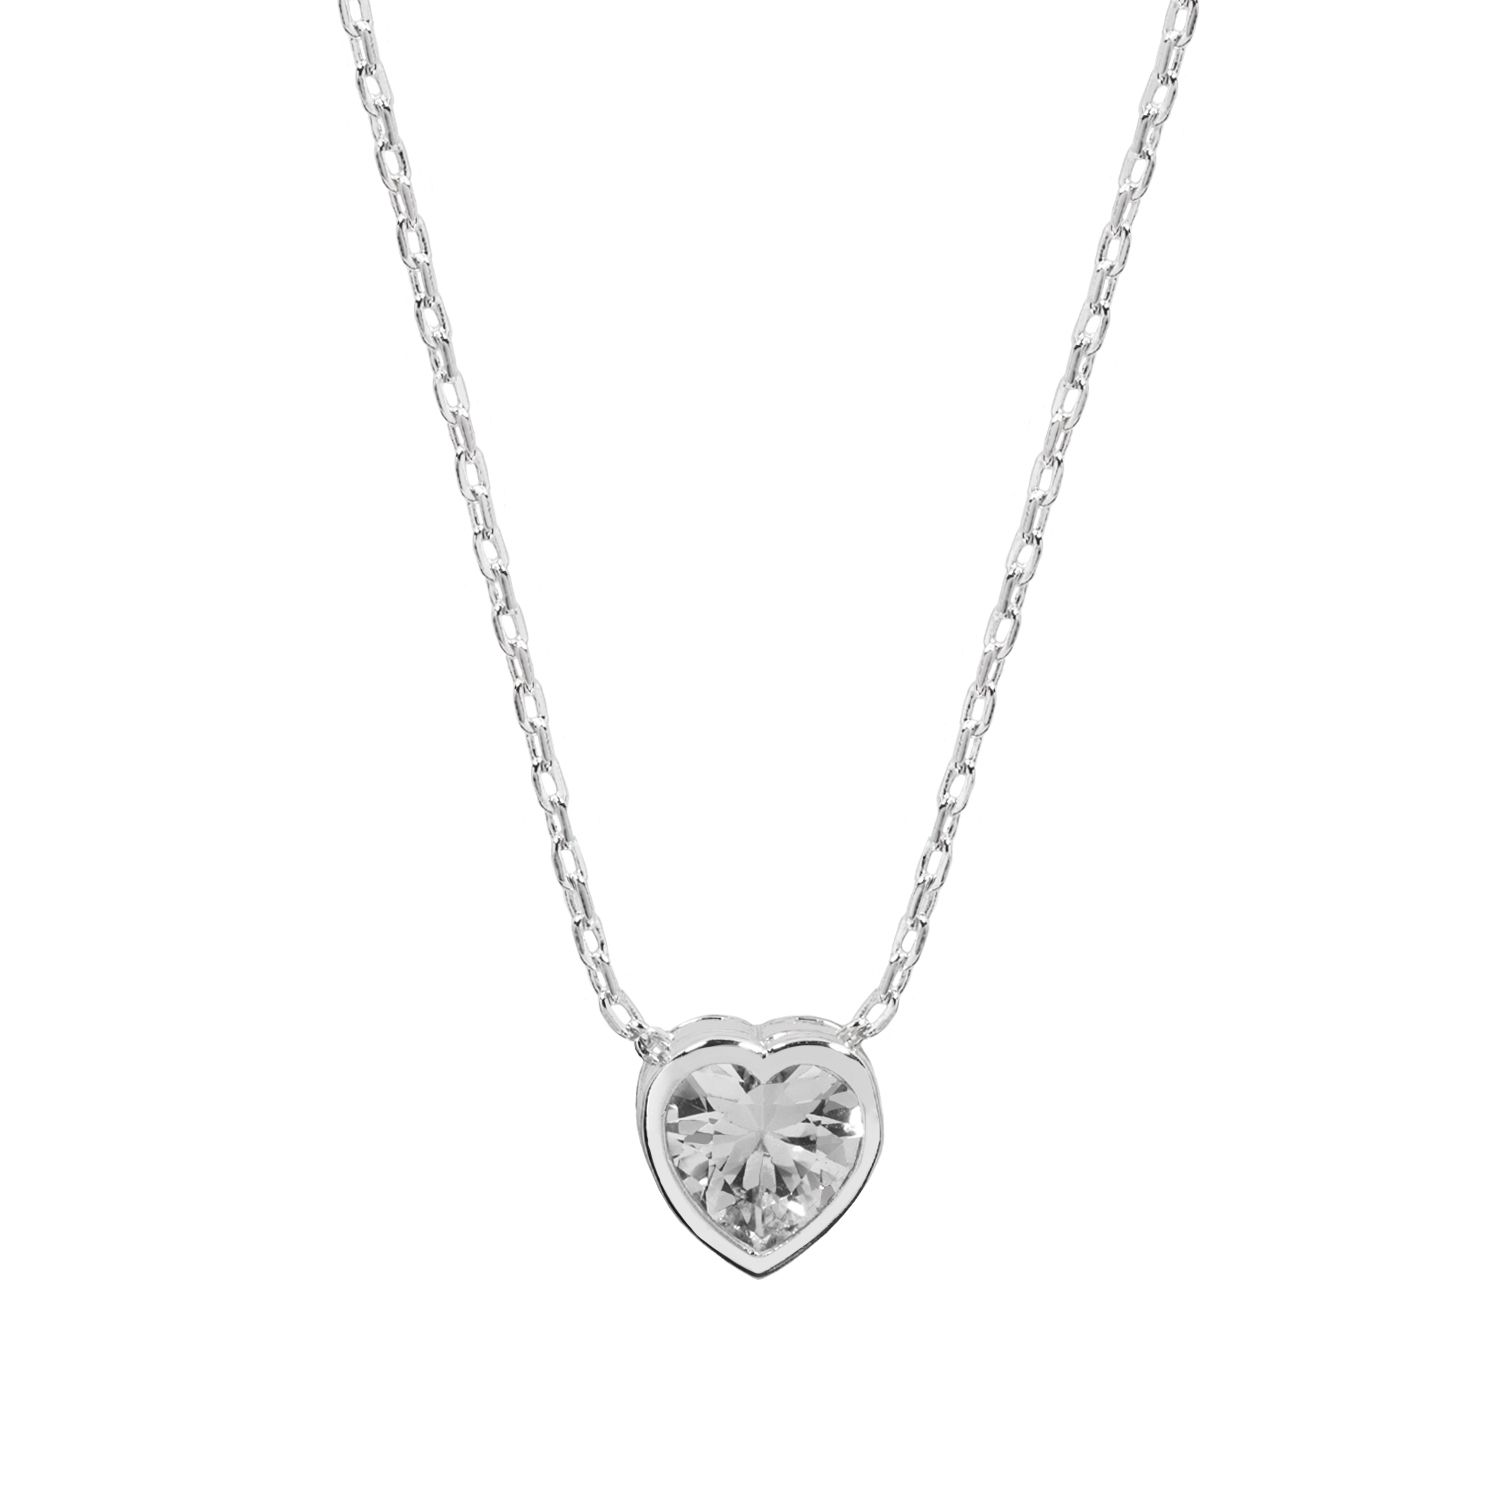 Image for LC Lauren Conrad Cubic Zirconia Heart Pendant Necklace at Kohl's.